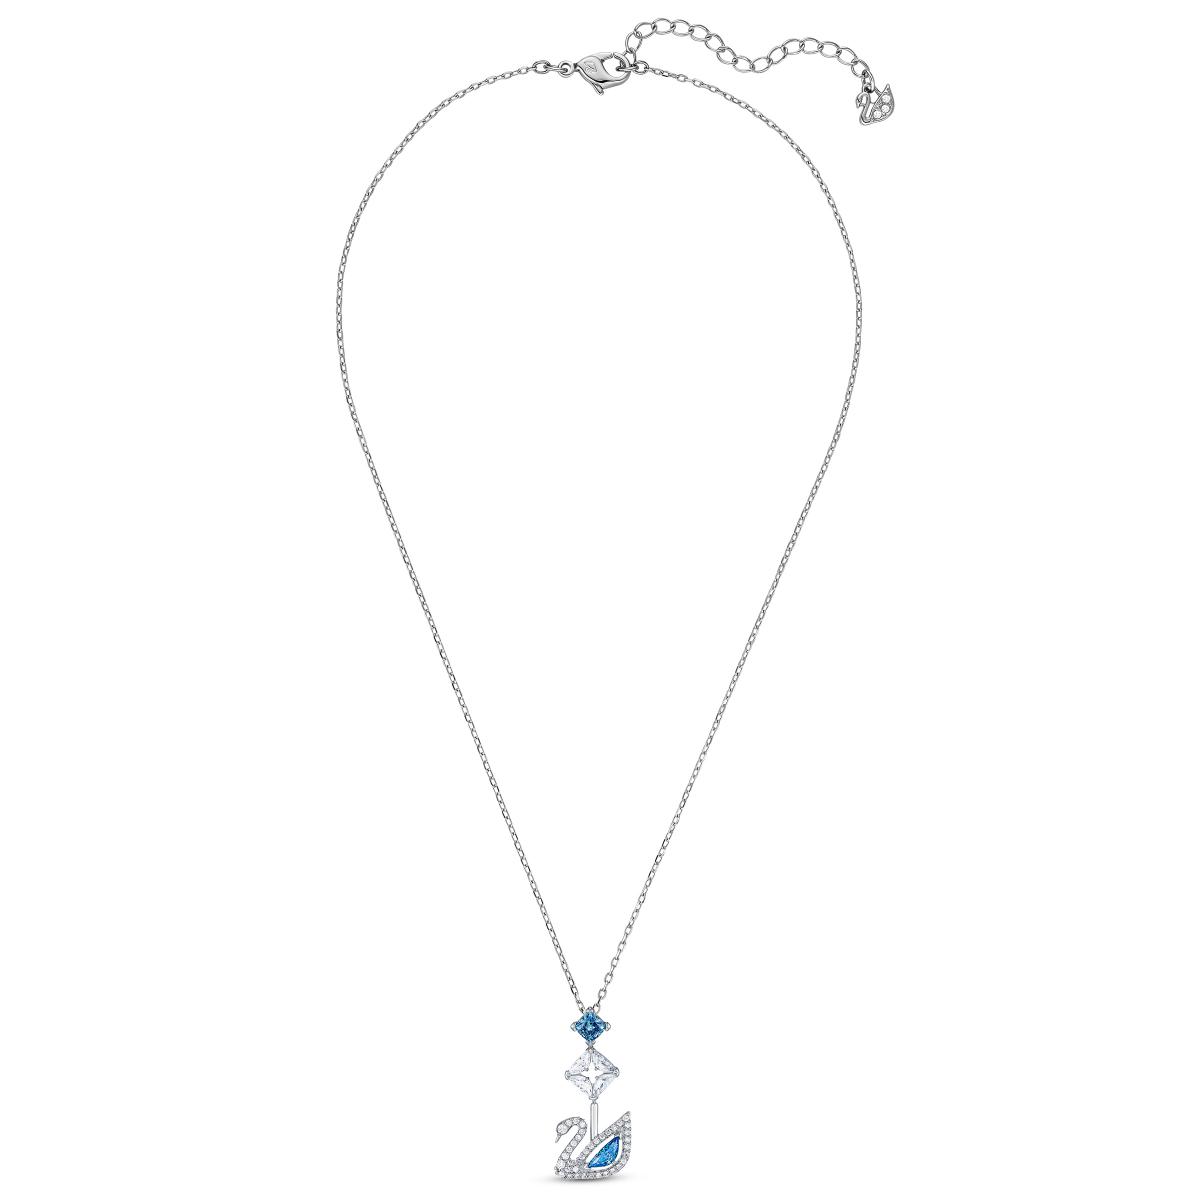 COLLIER Swarovski 5530625 - Collier Métal Argenté Cygne et Cristal Bleu  Strass Blanc Femme